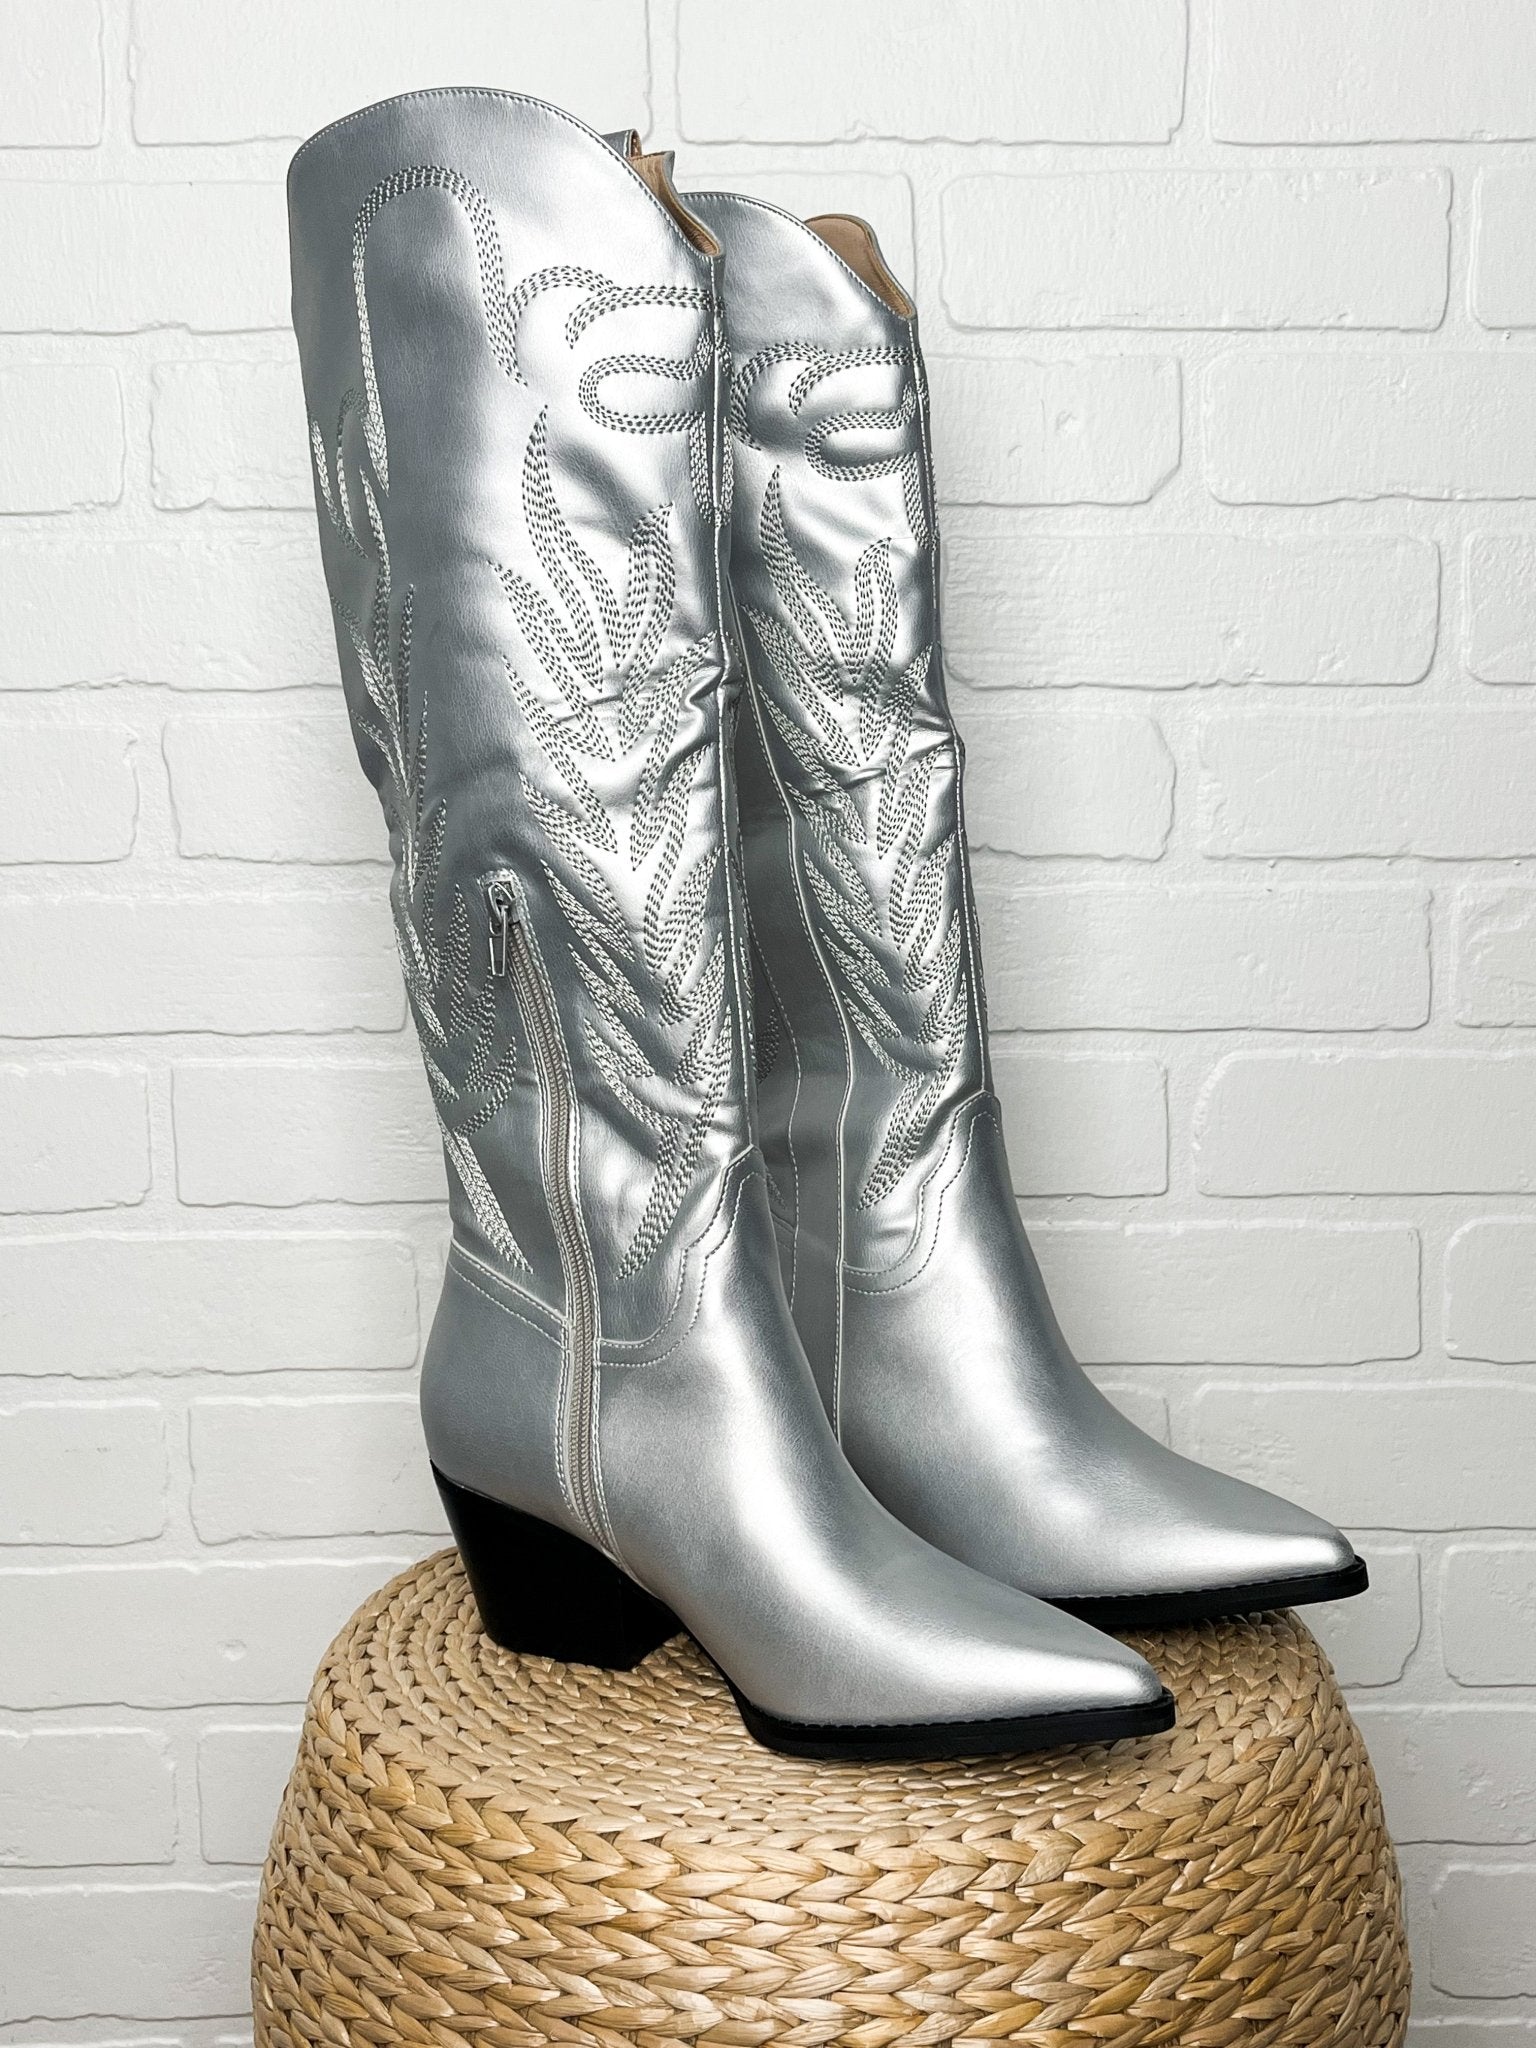 Samara cowboy boots silver - Trendy Shoes - Fashion Shoes at Lush Fashion Lounge Boutique in Oklahoma City